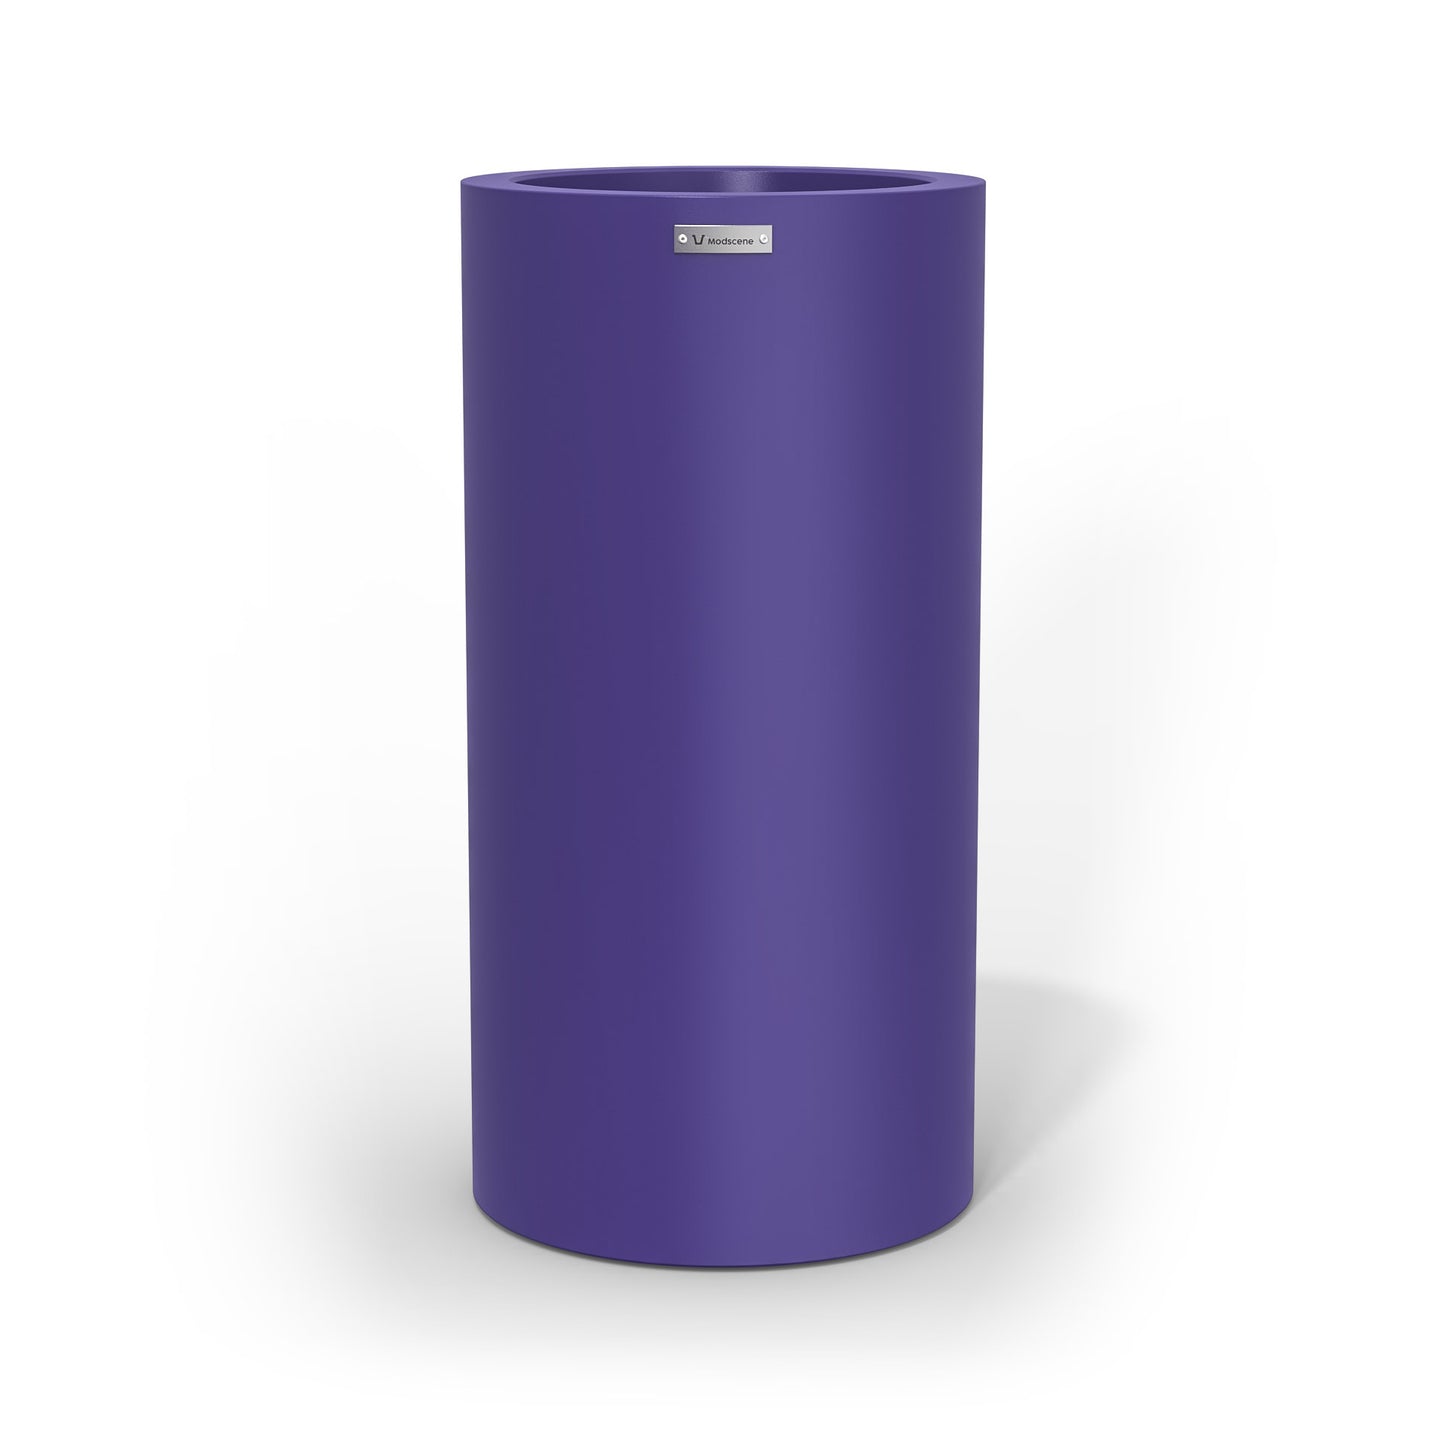 A large cigar cylinder pot planter in a lavender colour. 